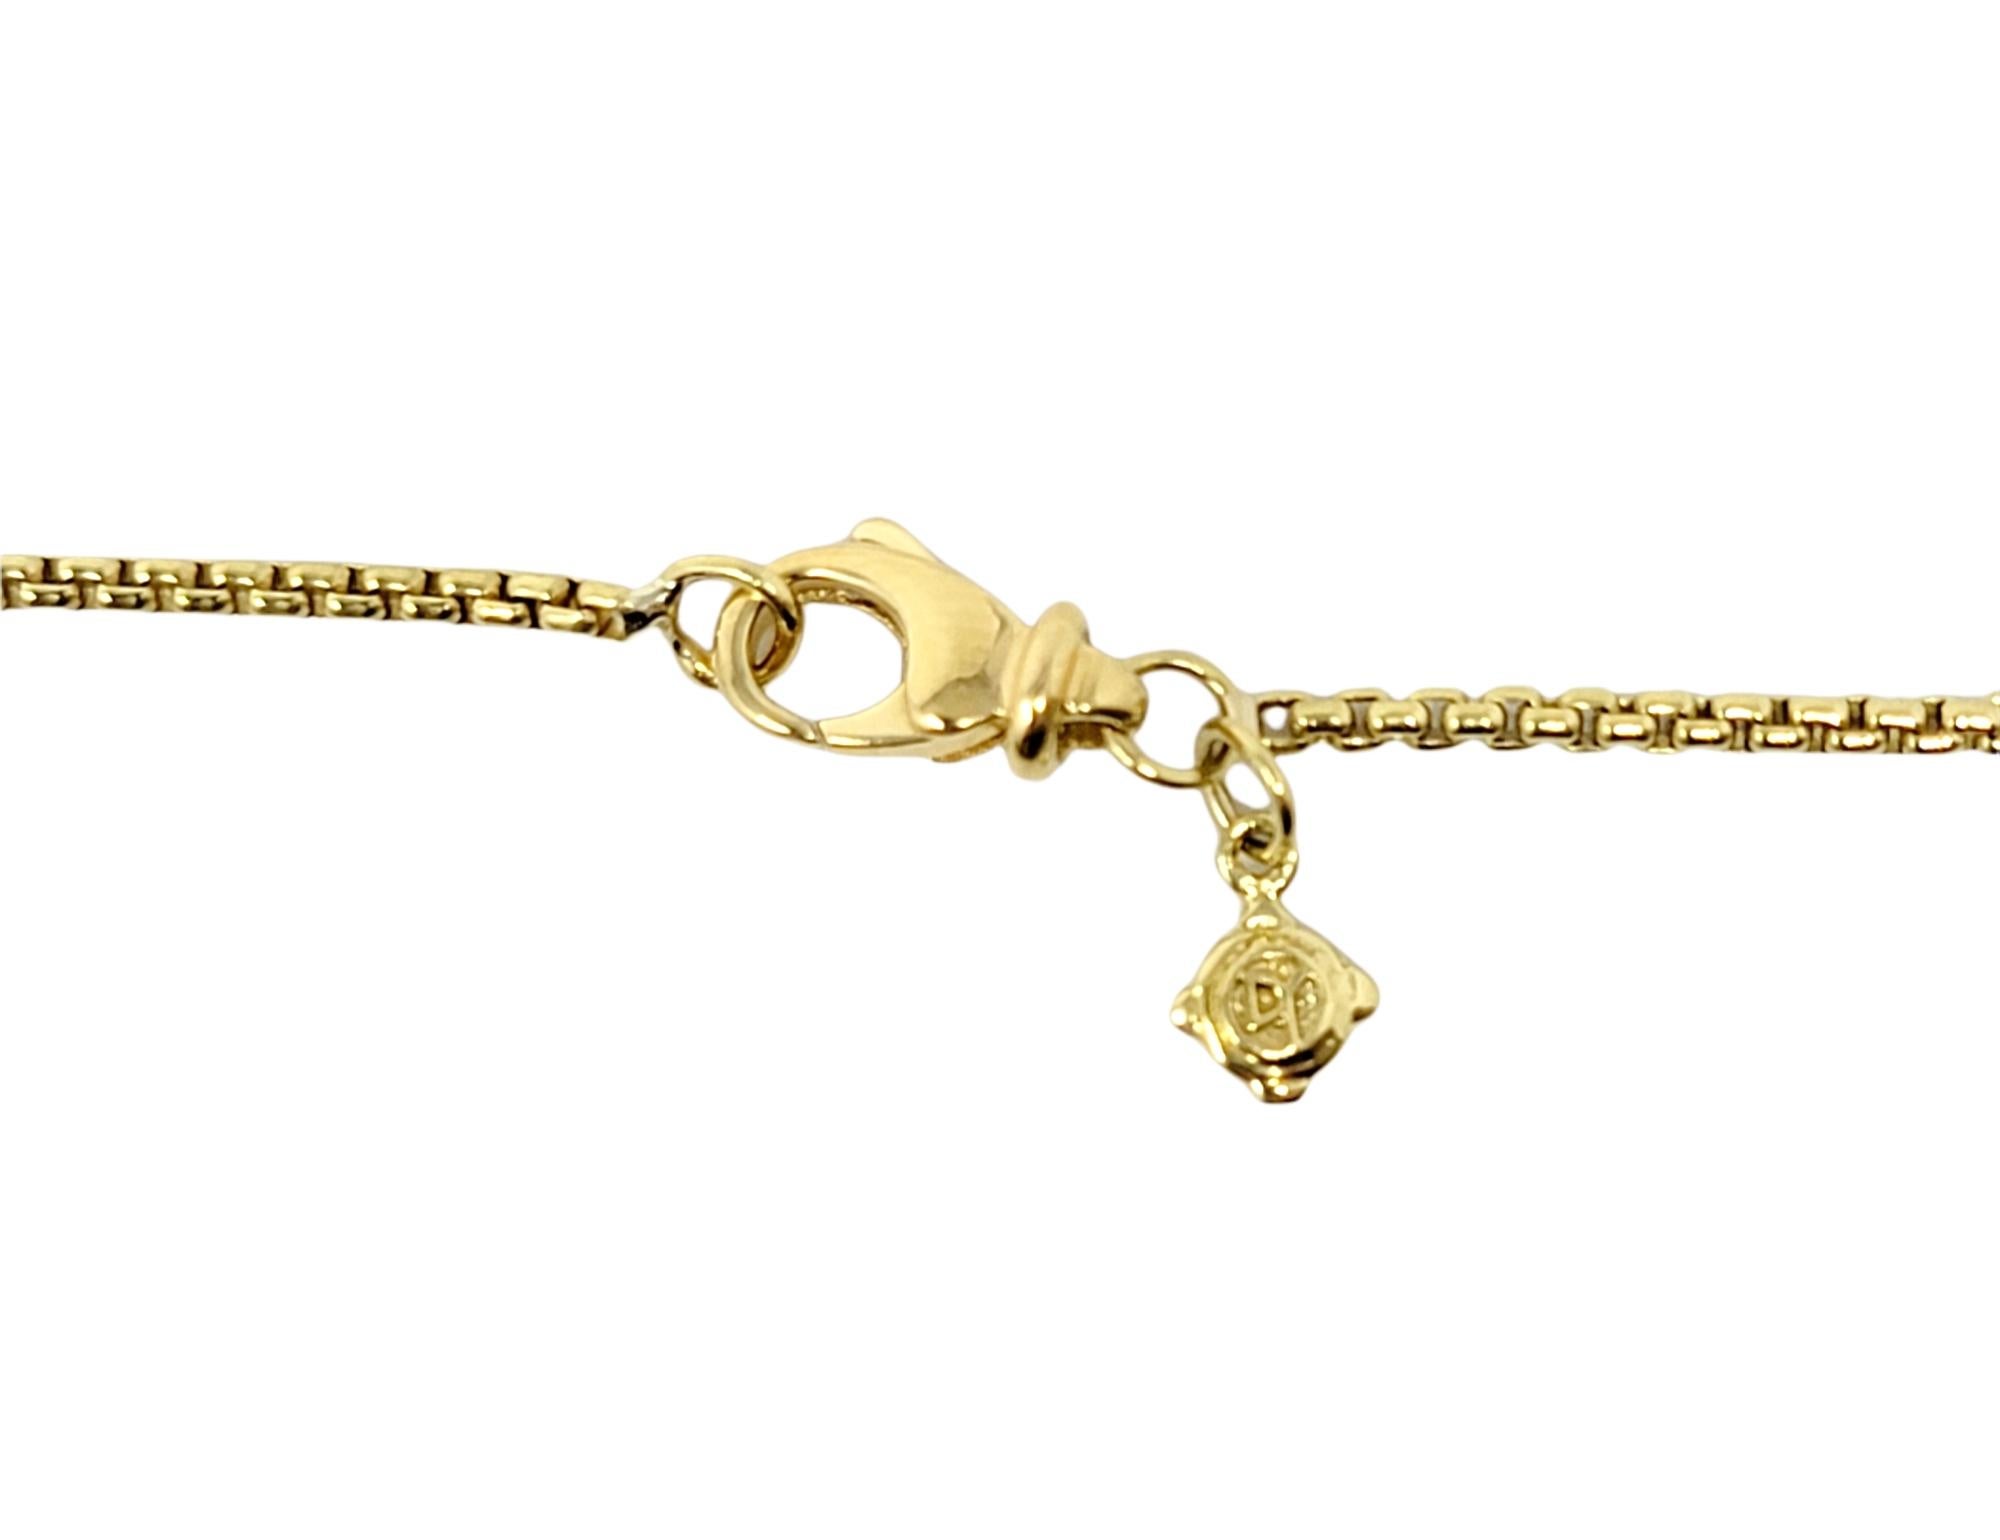 David Yurman 18 Karat Yellow Gold Open Heart Cable Pendant Necklace Box Chain For Sale 3